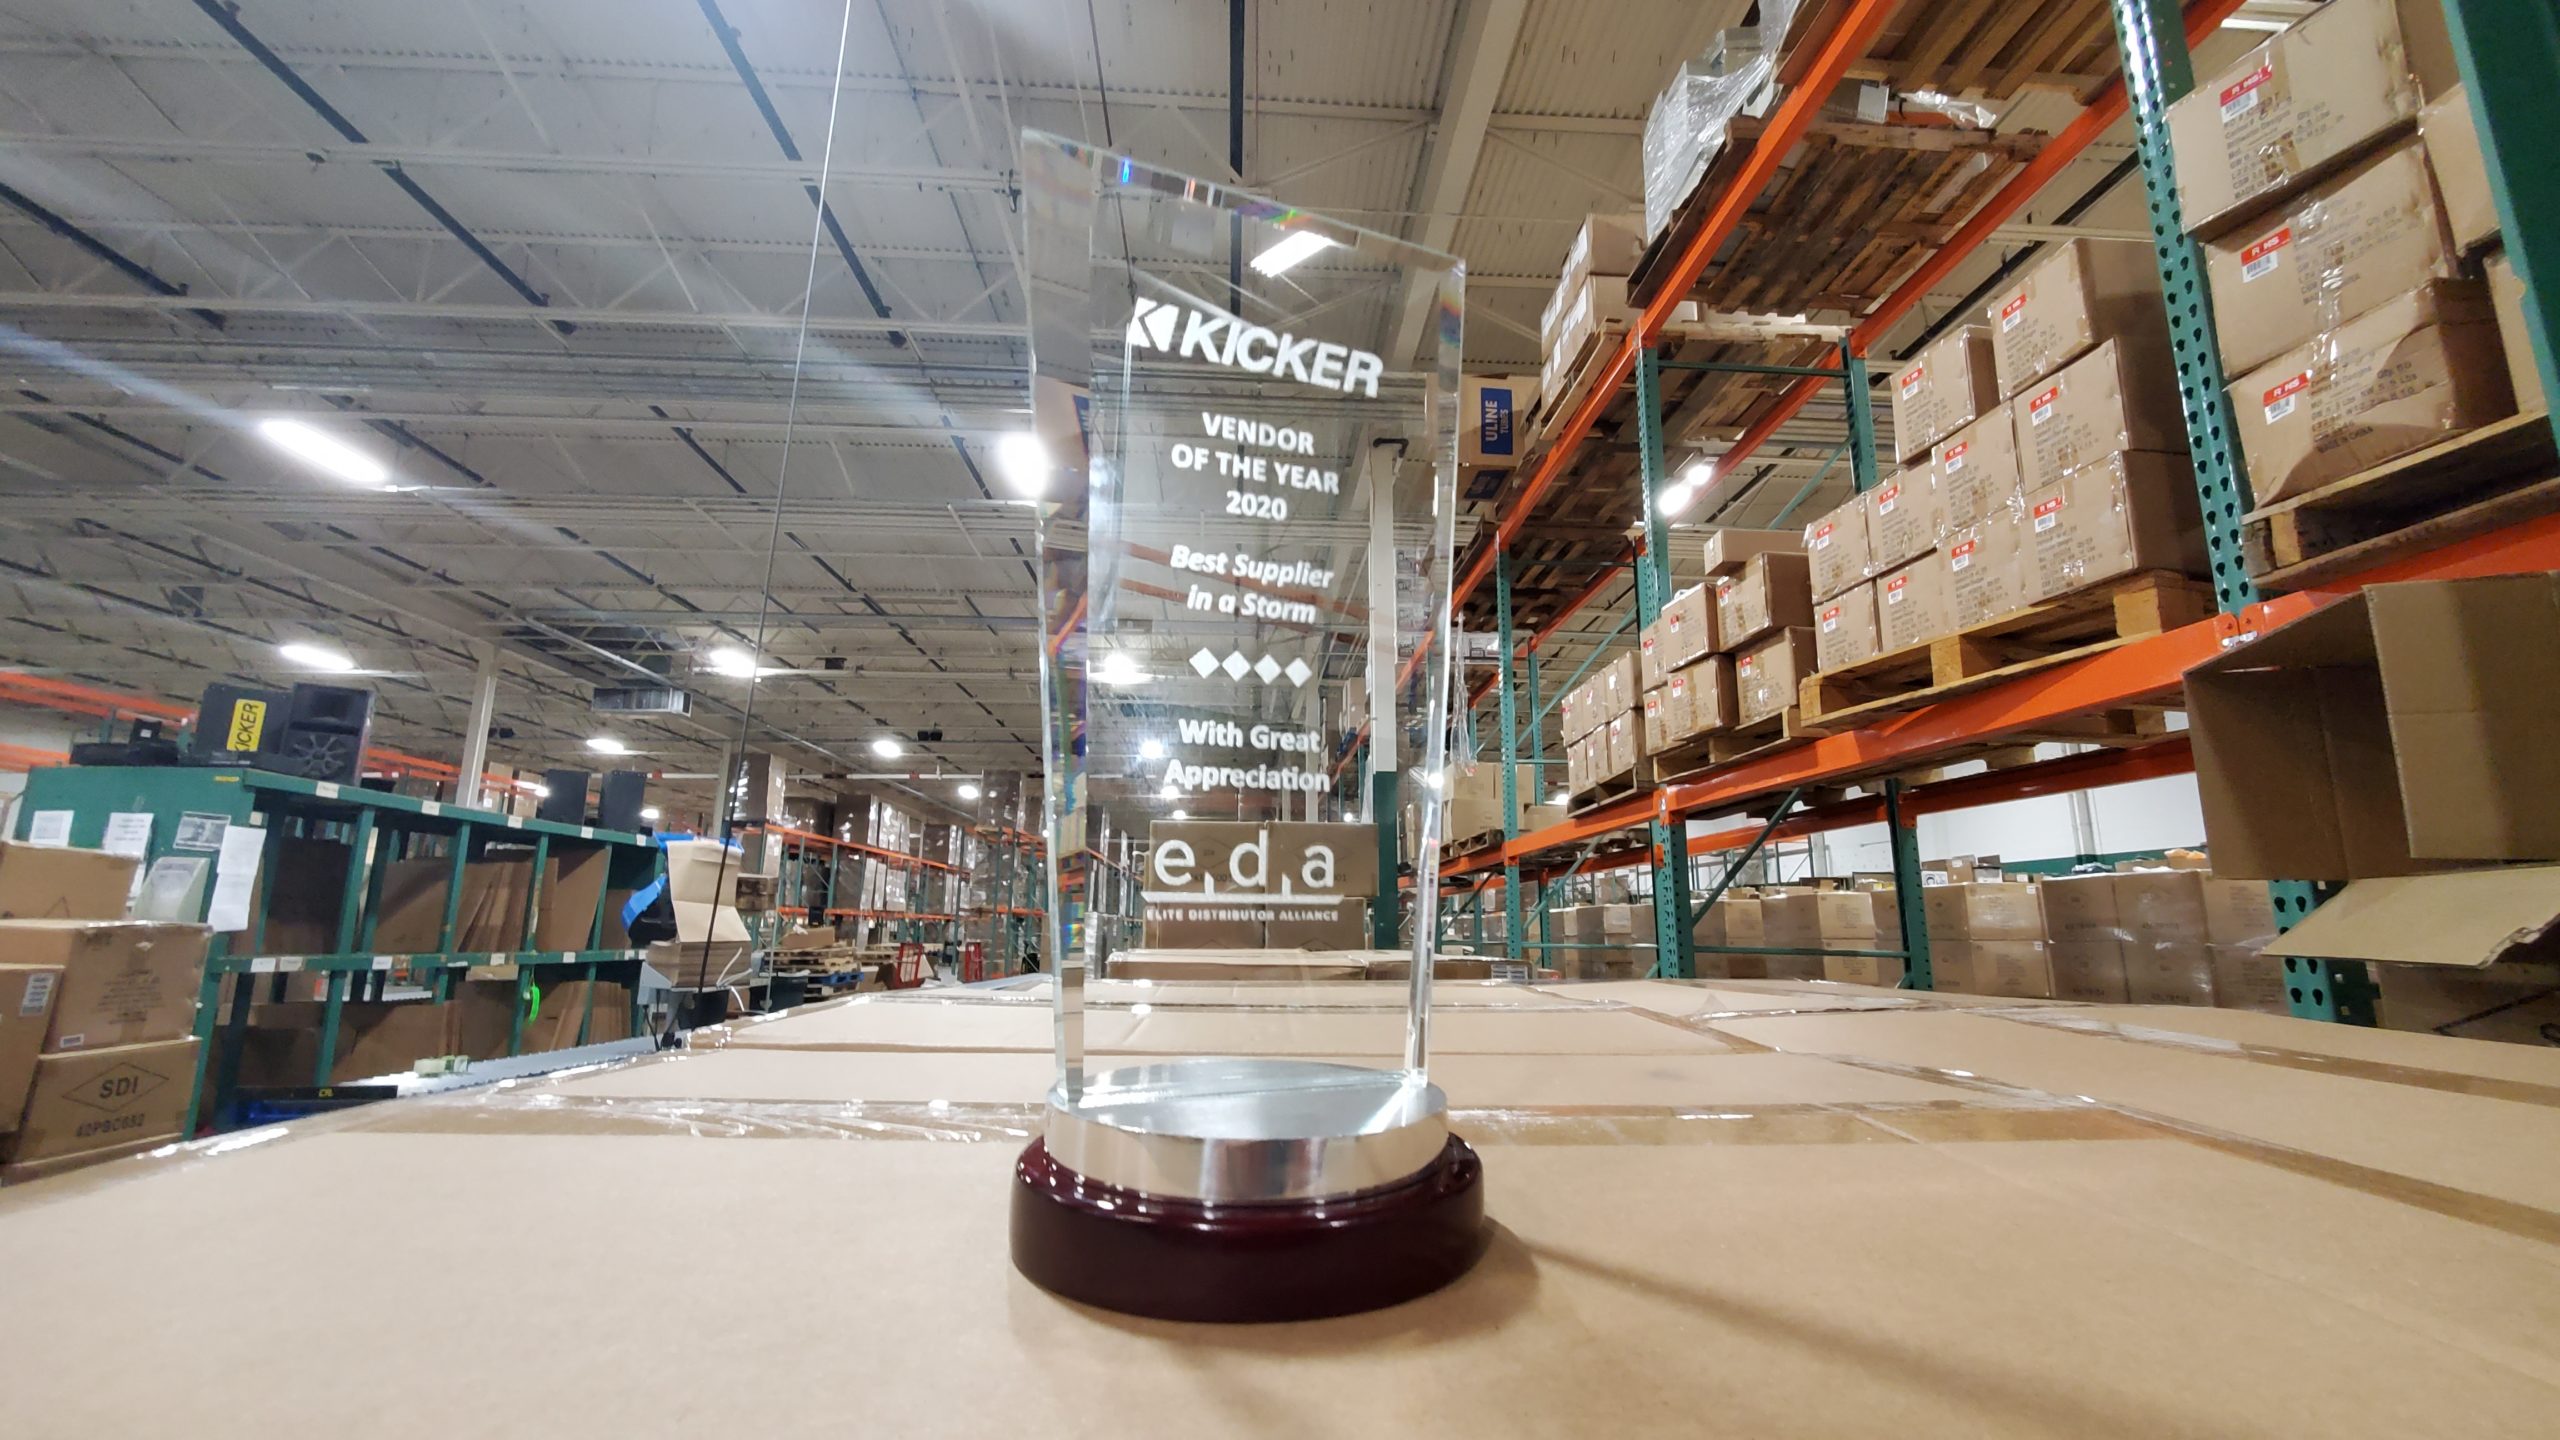 KICKER Wins EDA Vendor of the Year Award | THE SHOP